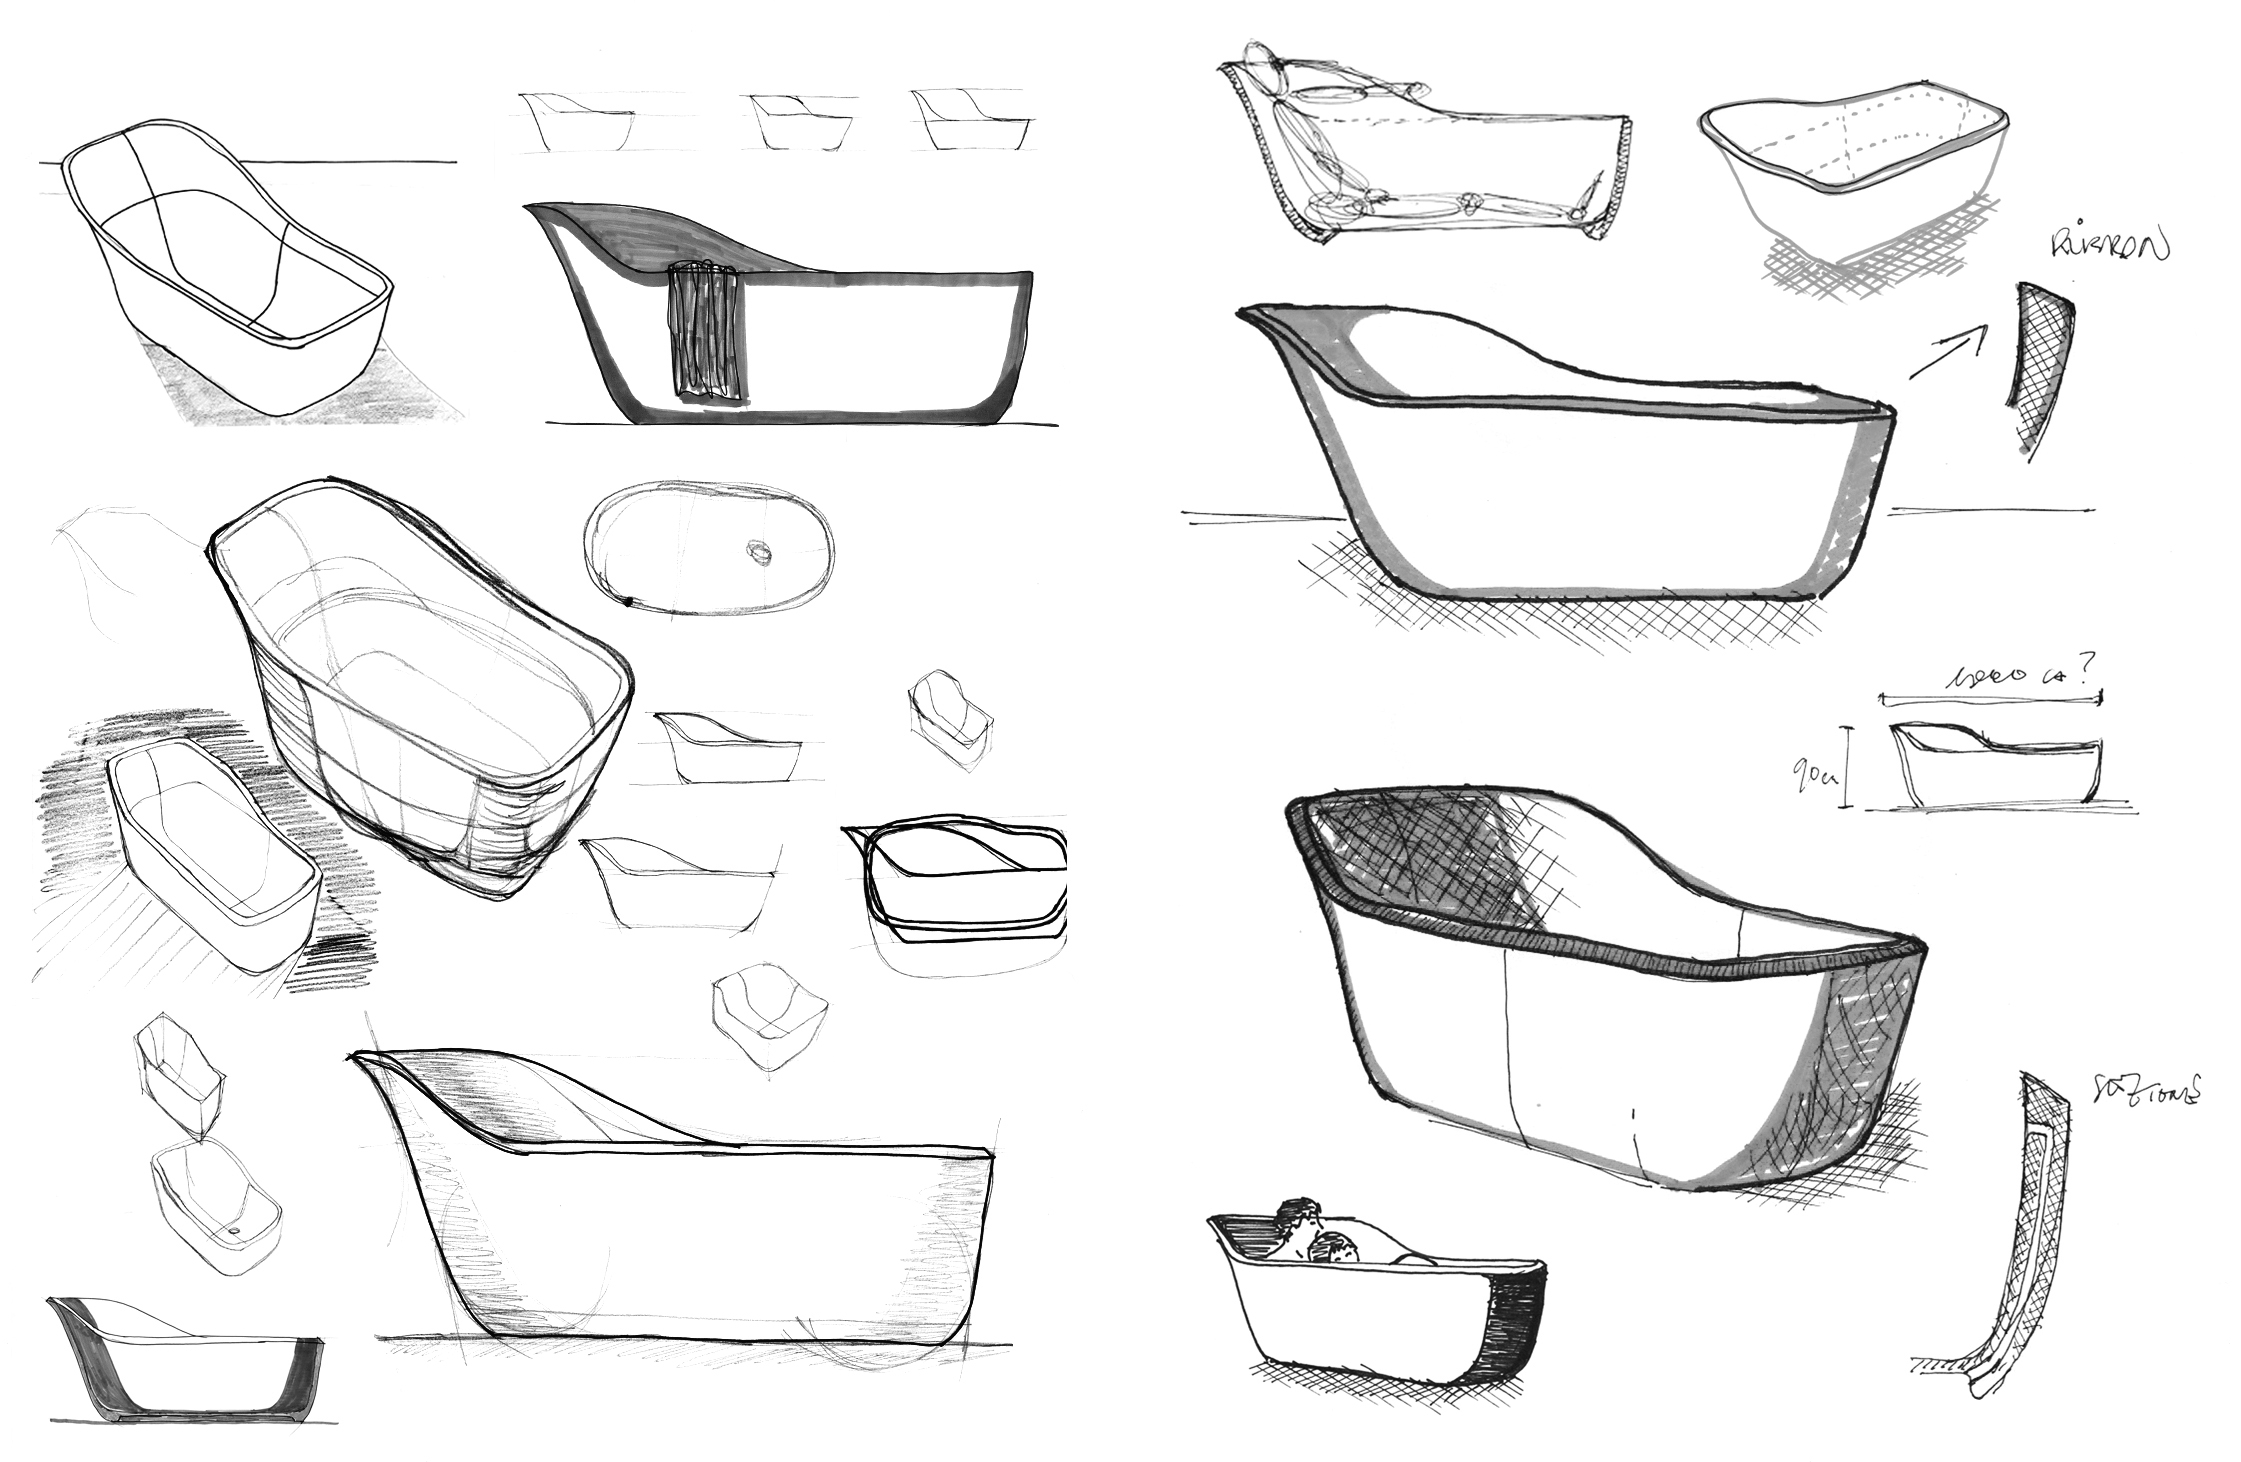 Concept sketches of Wanda bathtub by Debiasi Sandri for Antoniolupi